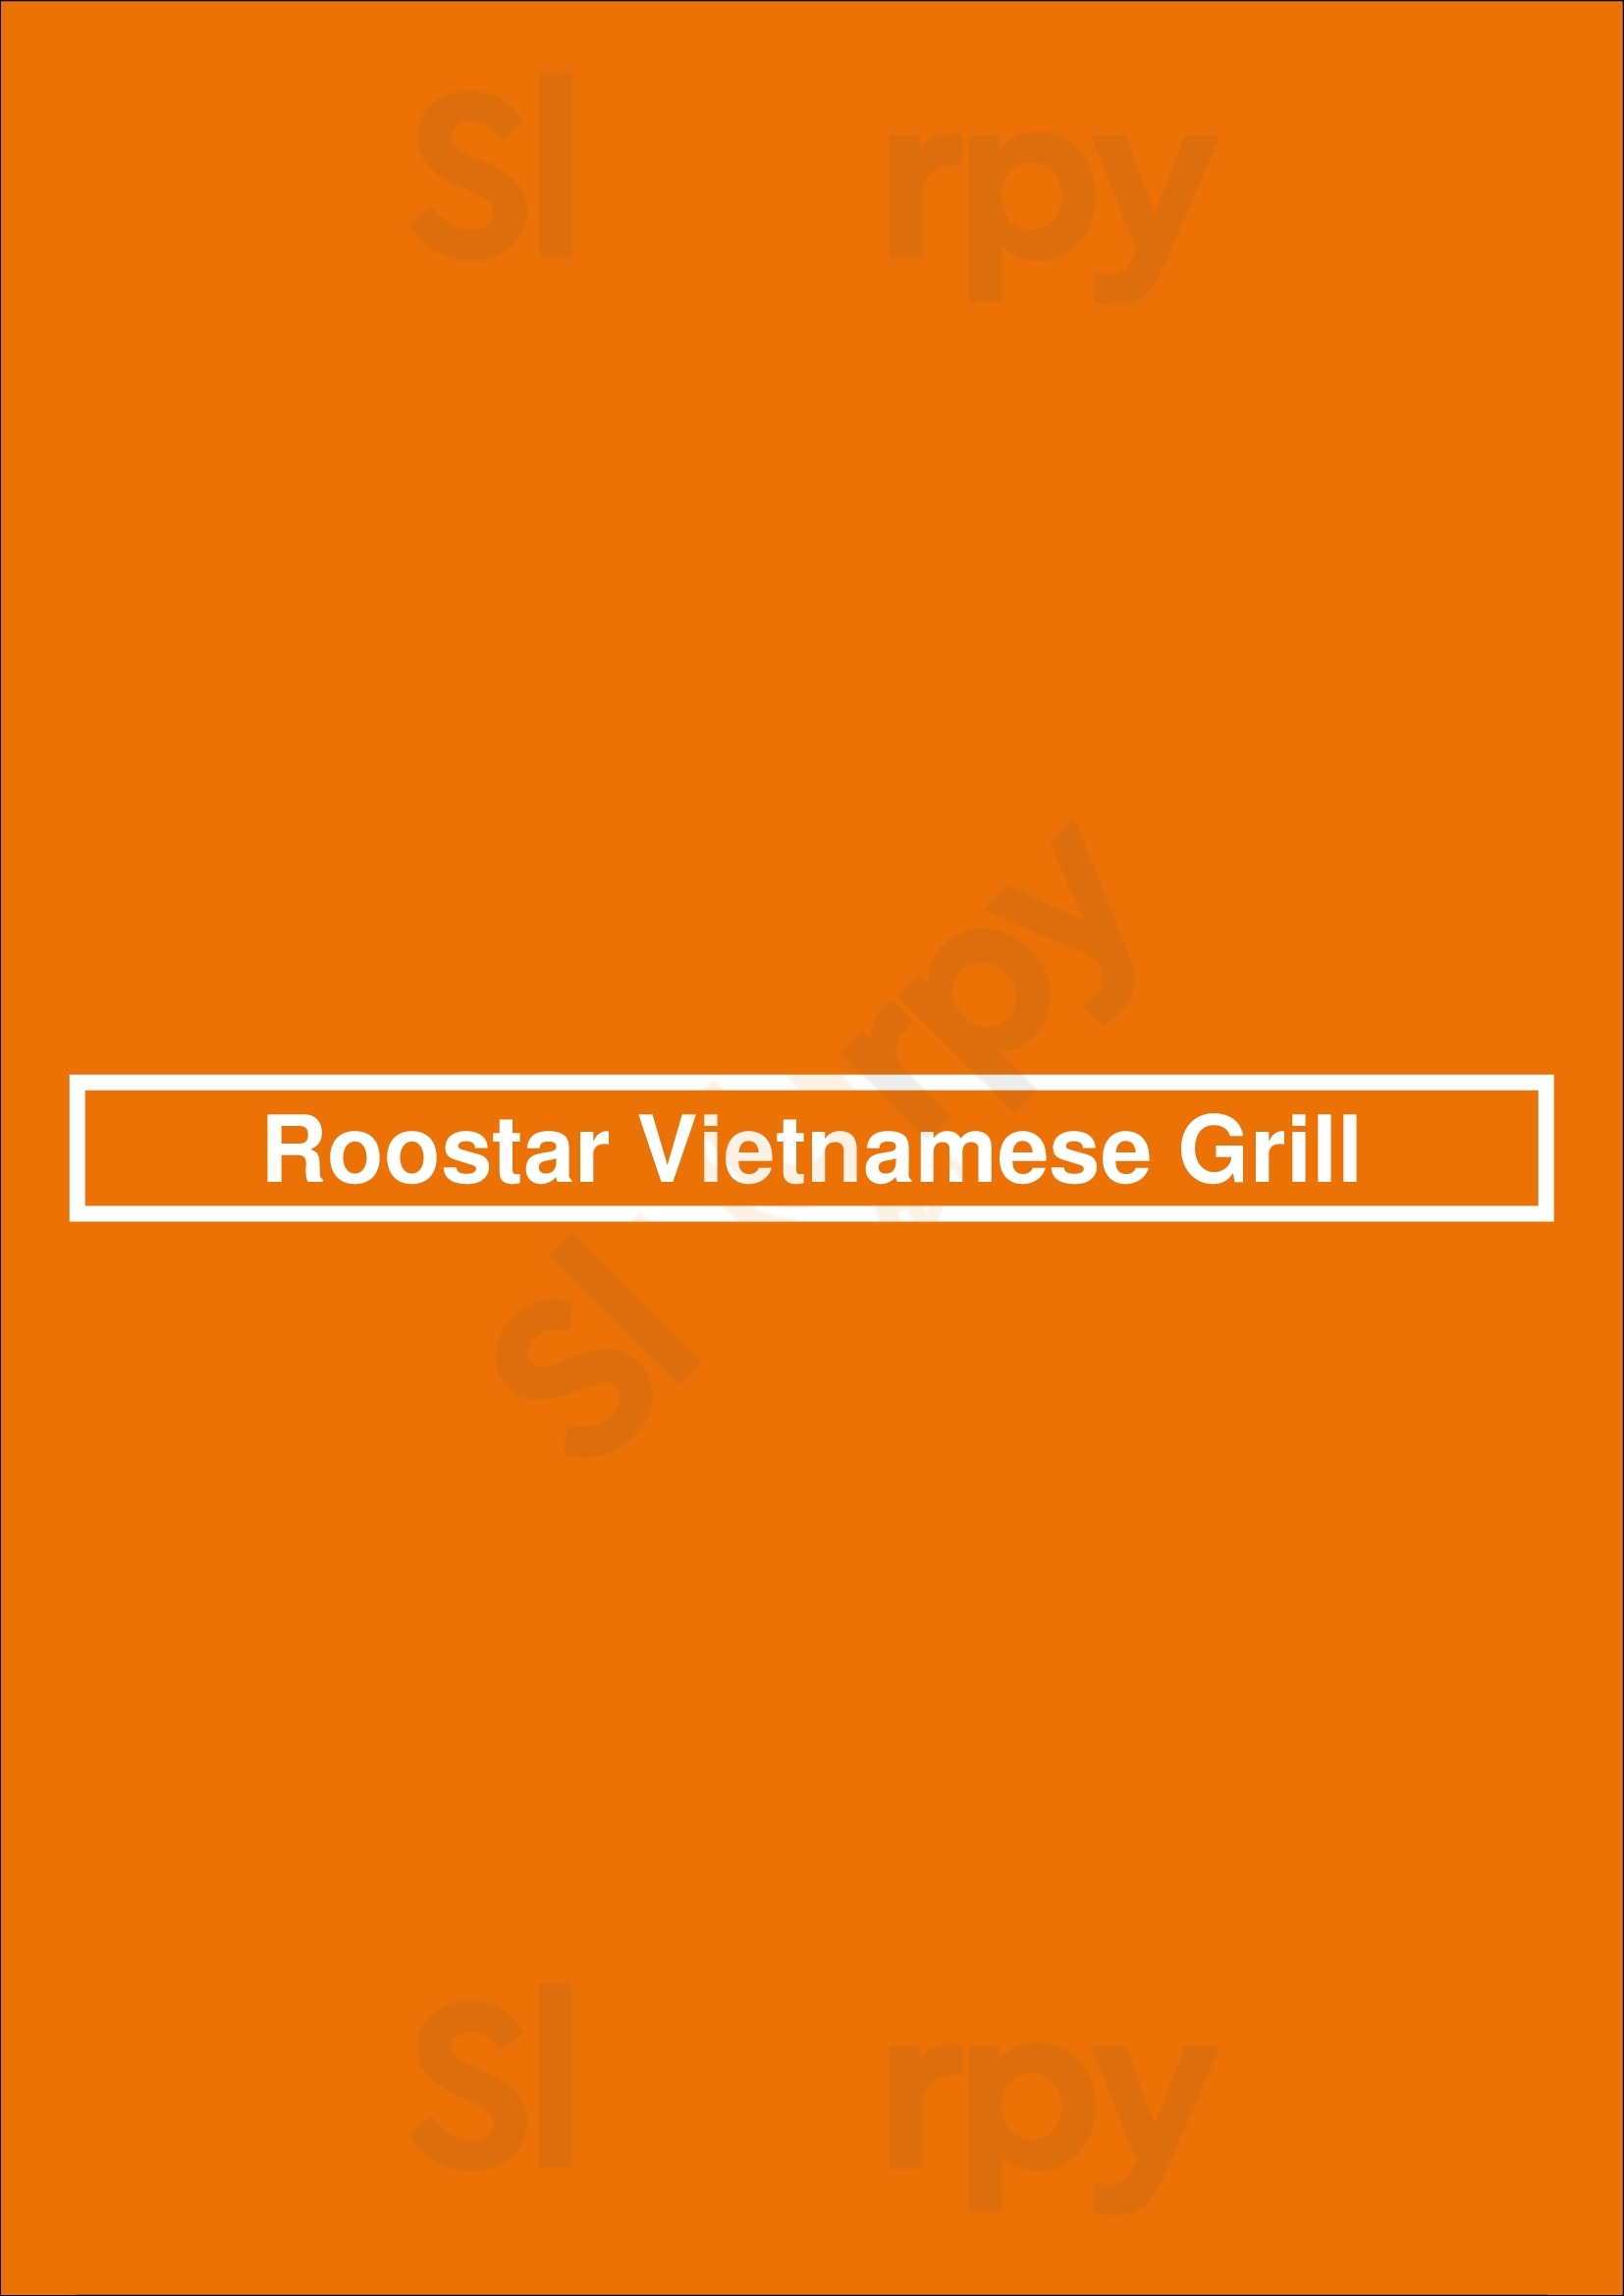 Roostar Vietnamese Grill Houston Menu - 1